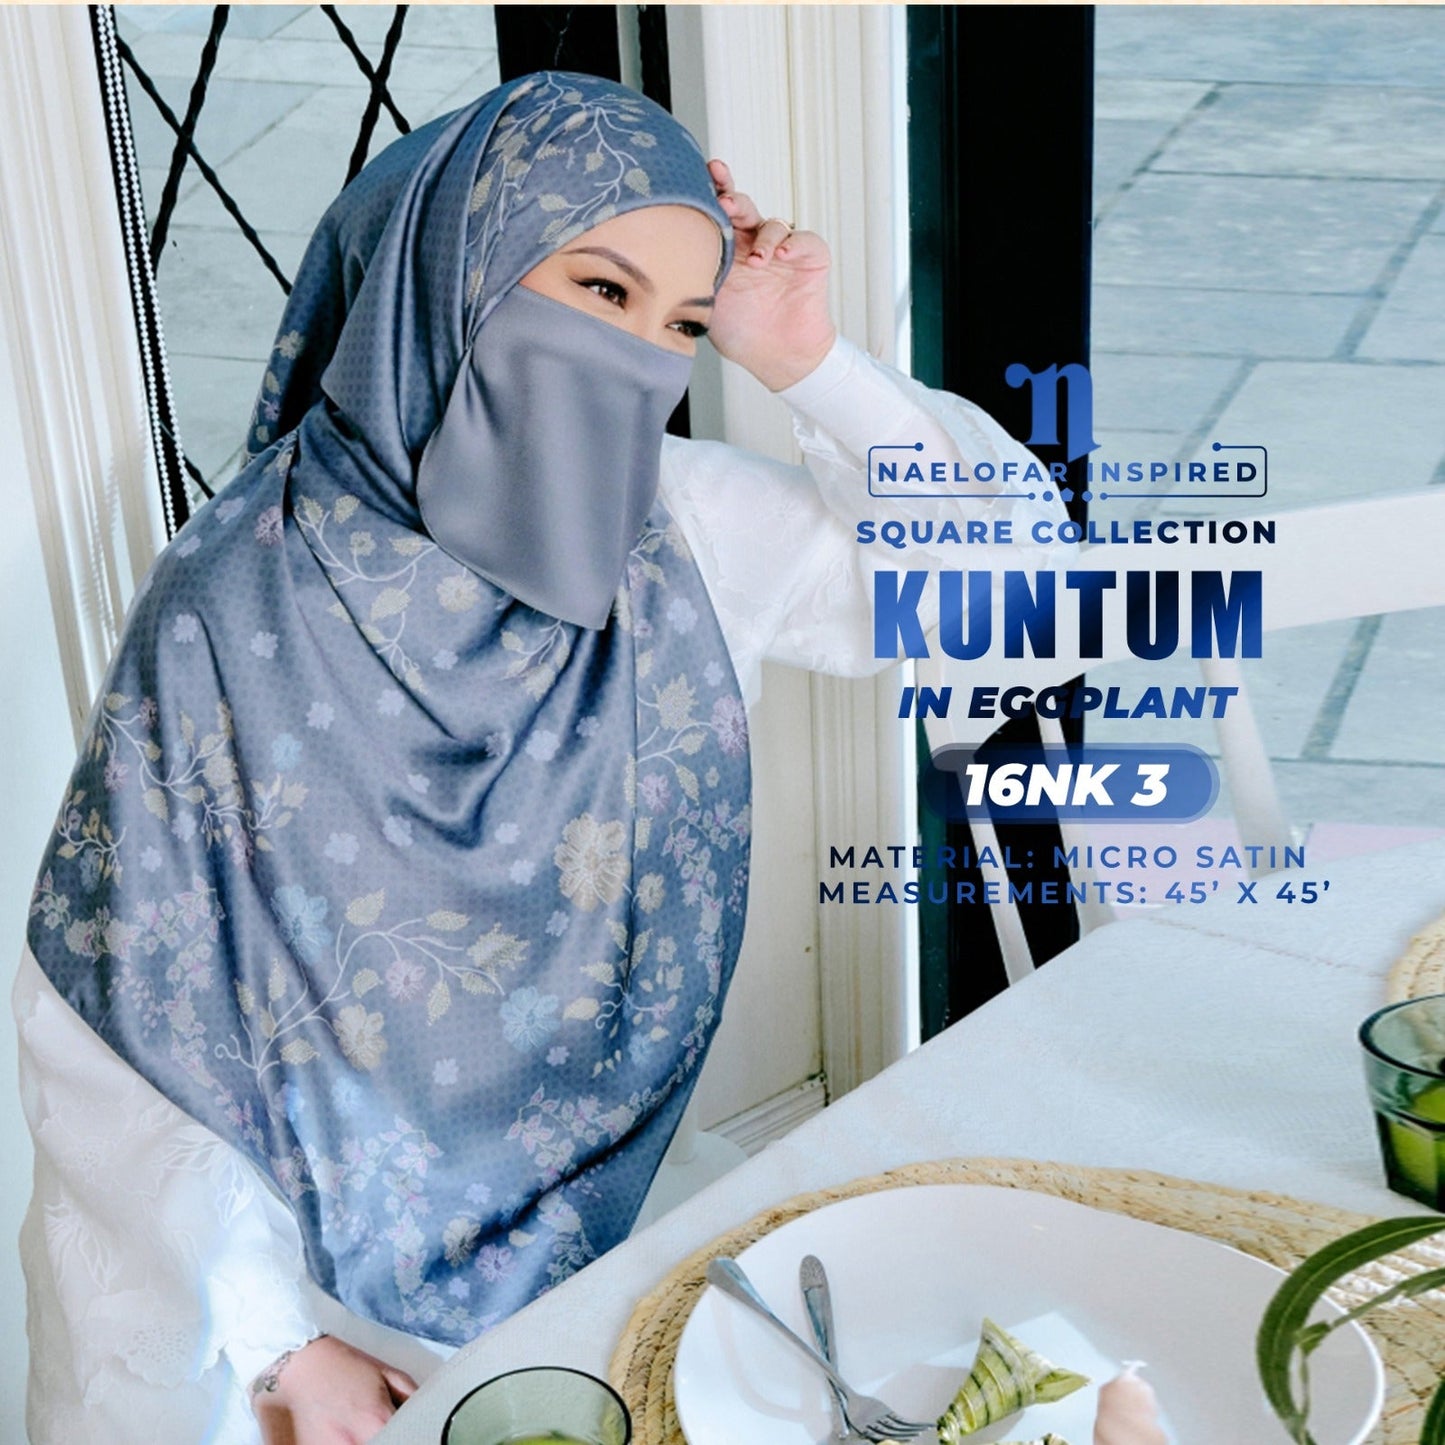 Naelofar Inspired Kuntum SQ Printed Collection (16NK)